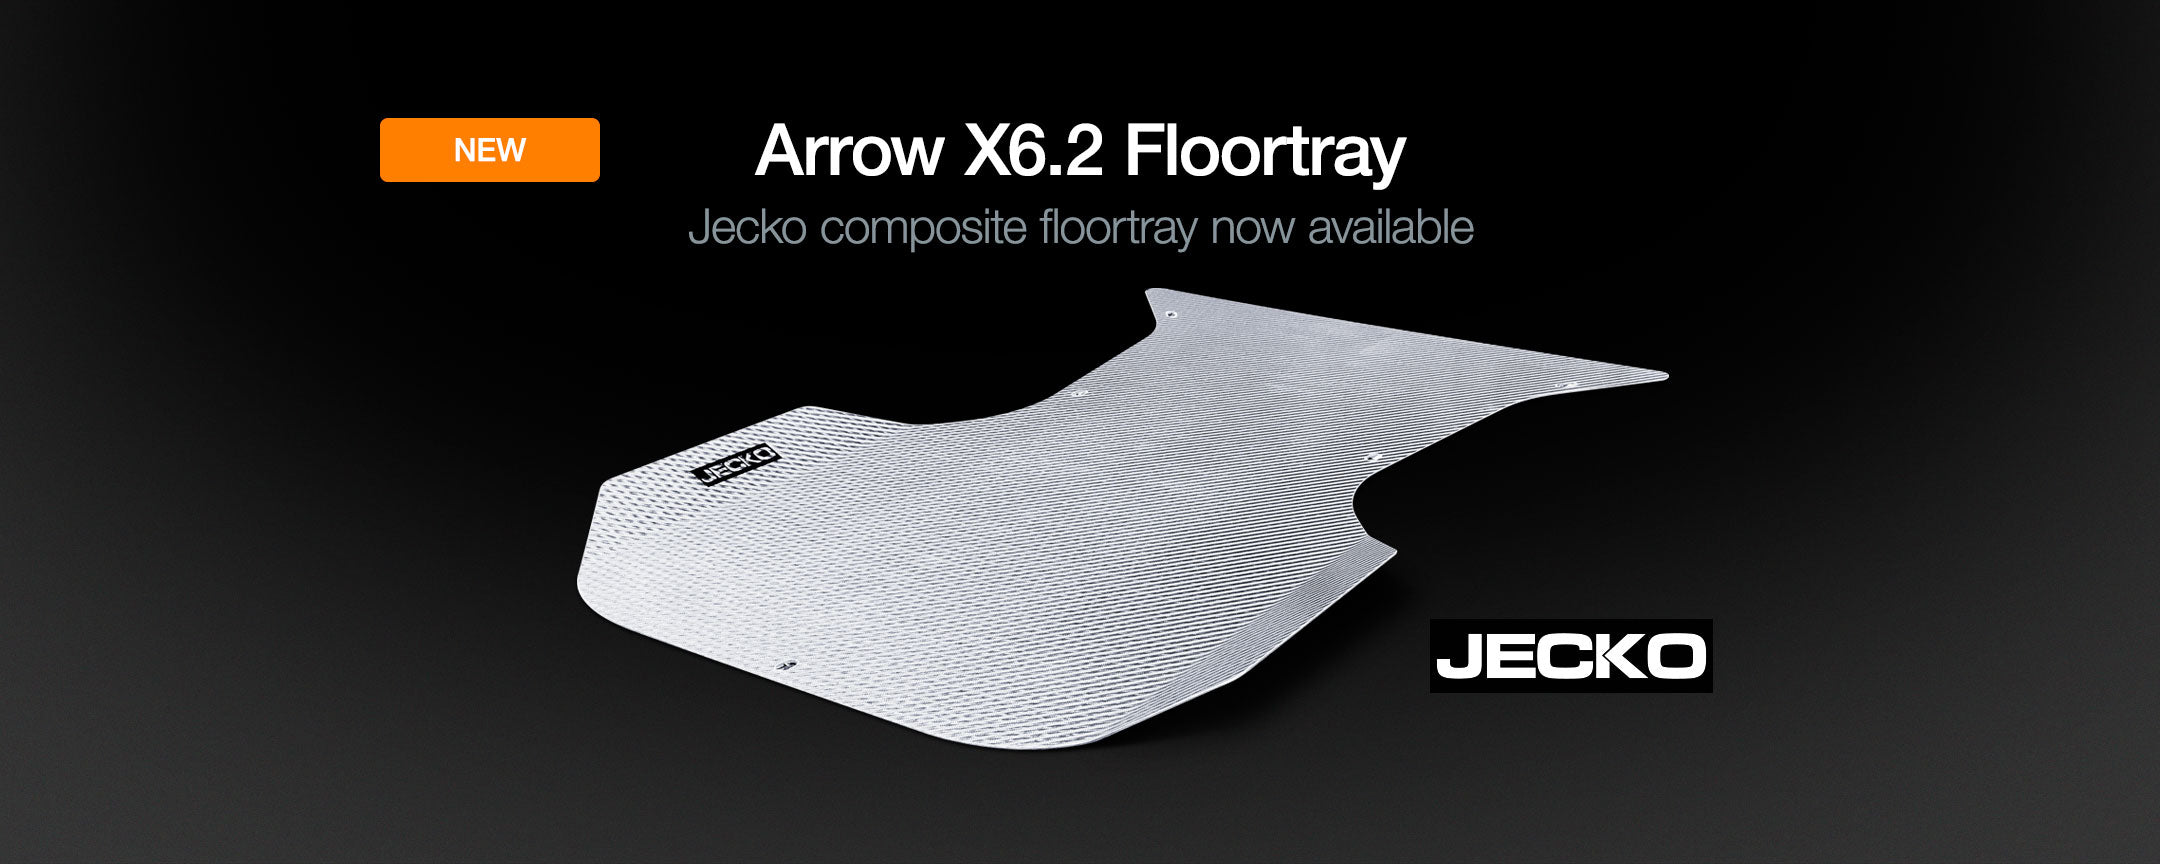 Jecko Composite Floortray for Arrow X6.2